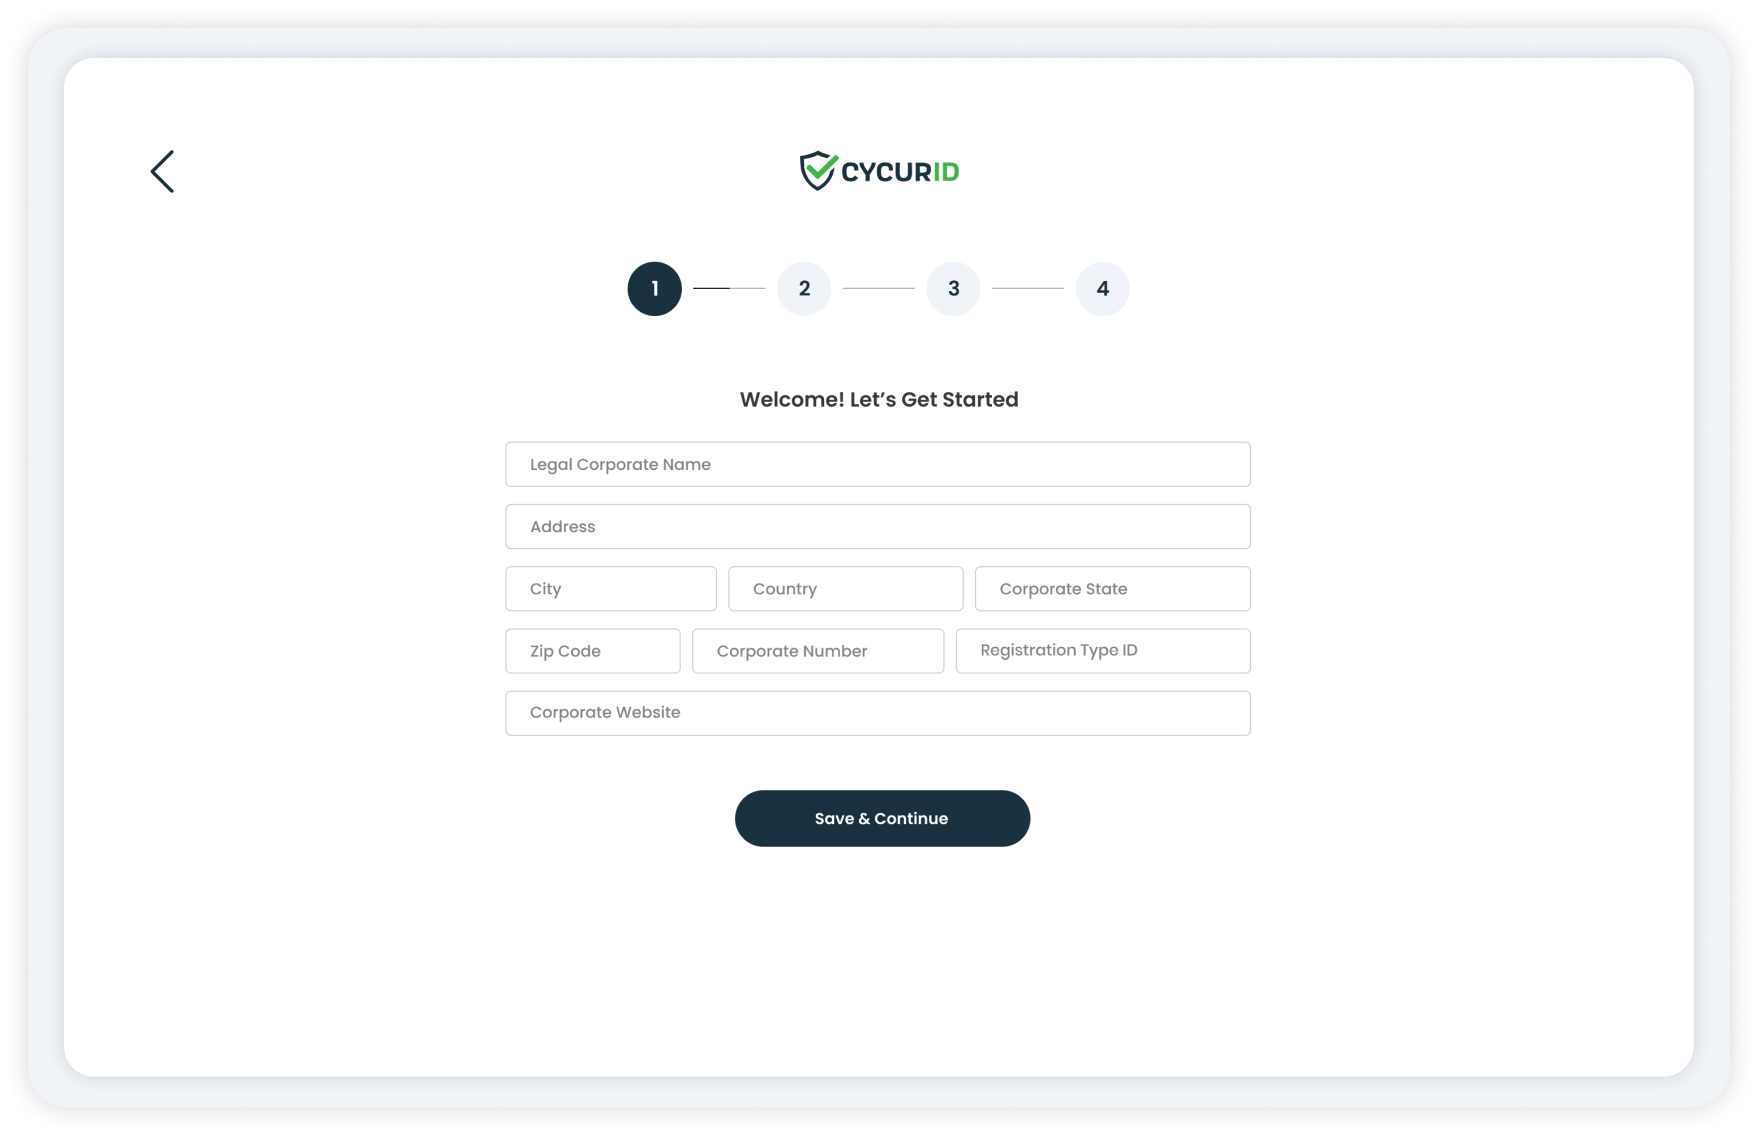 CycurID dashboard merchant signup form screenshot